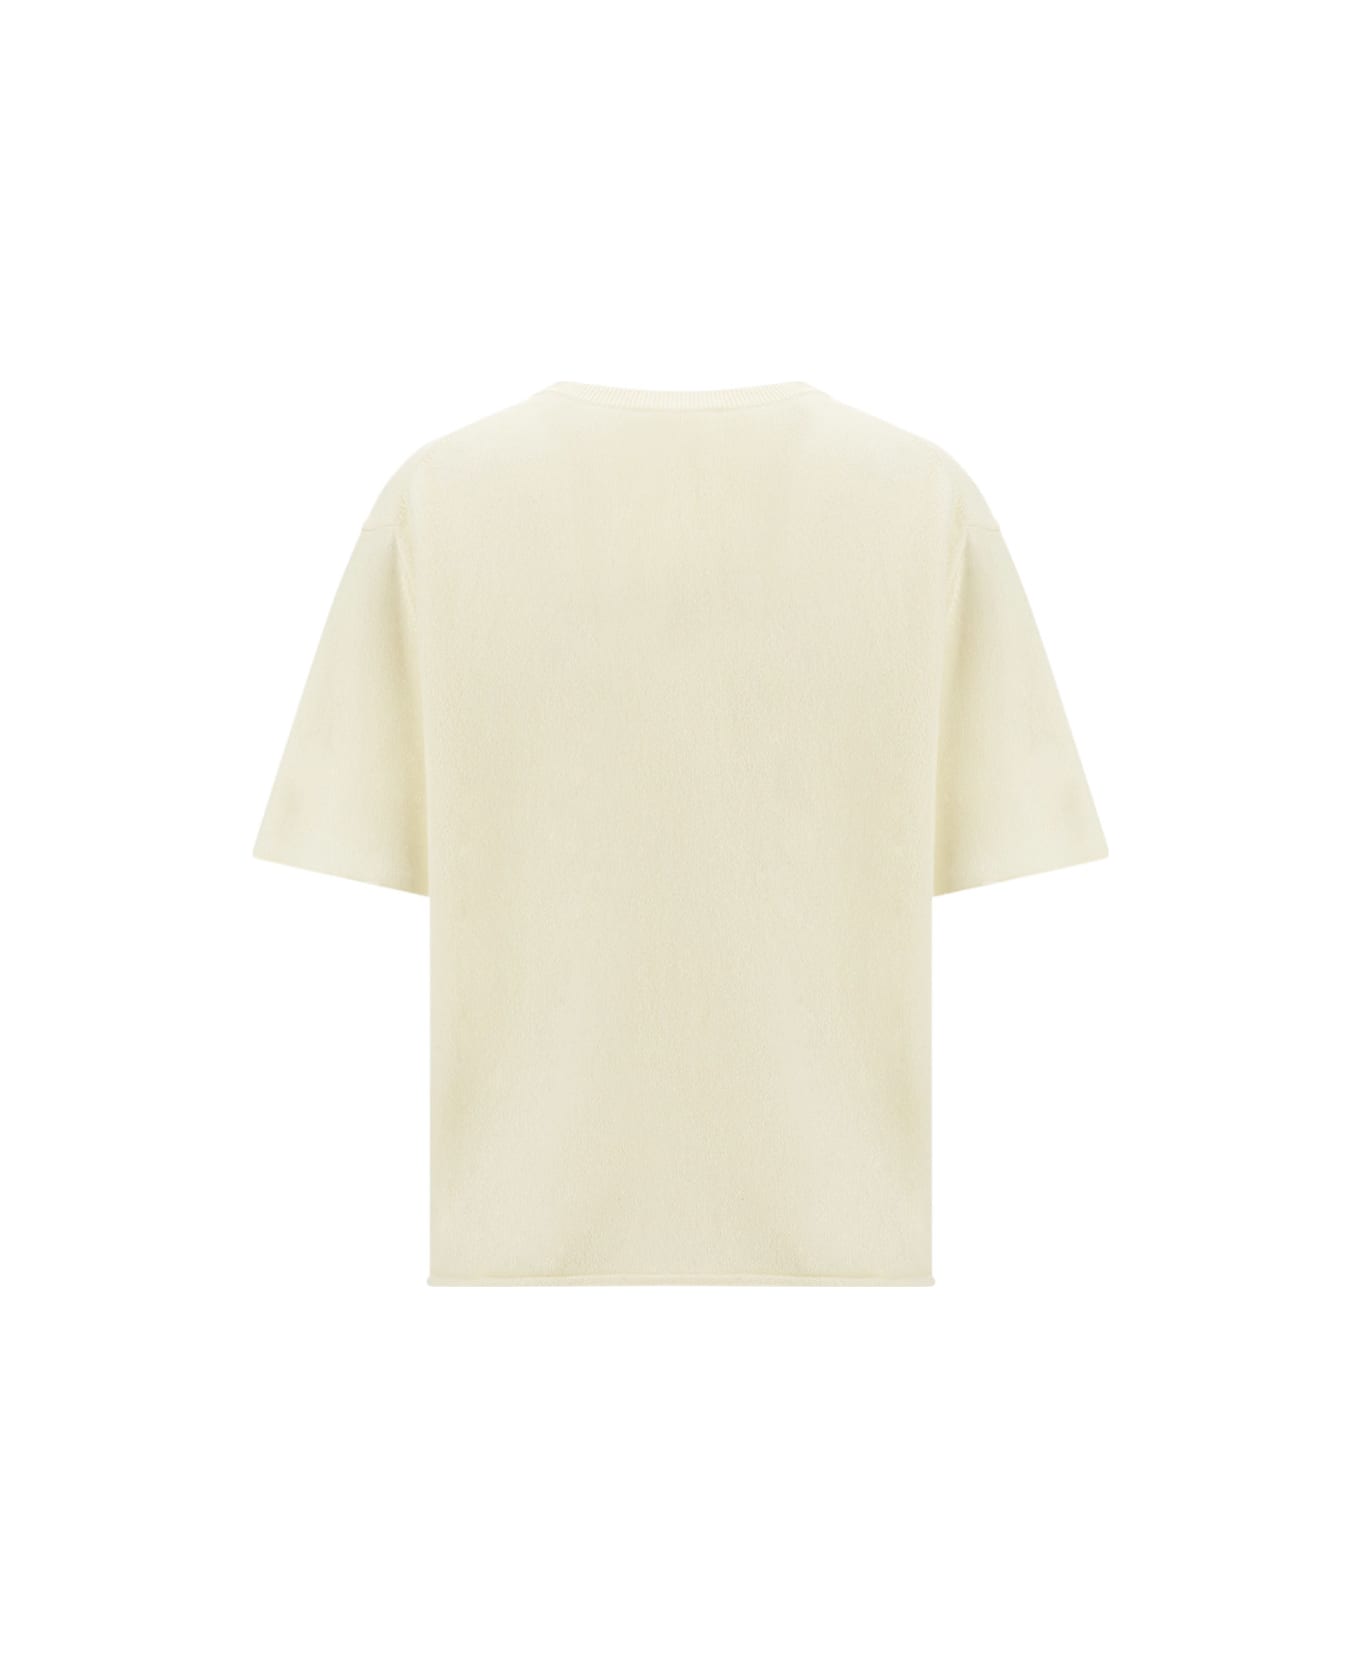 Lisa Yang Cila T-shirt - Cream